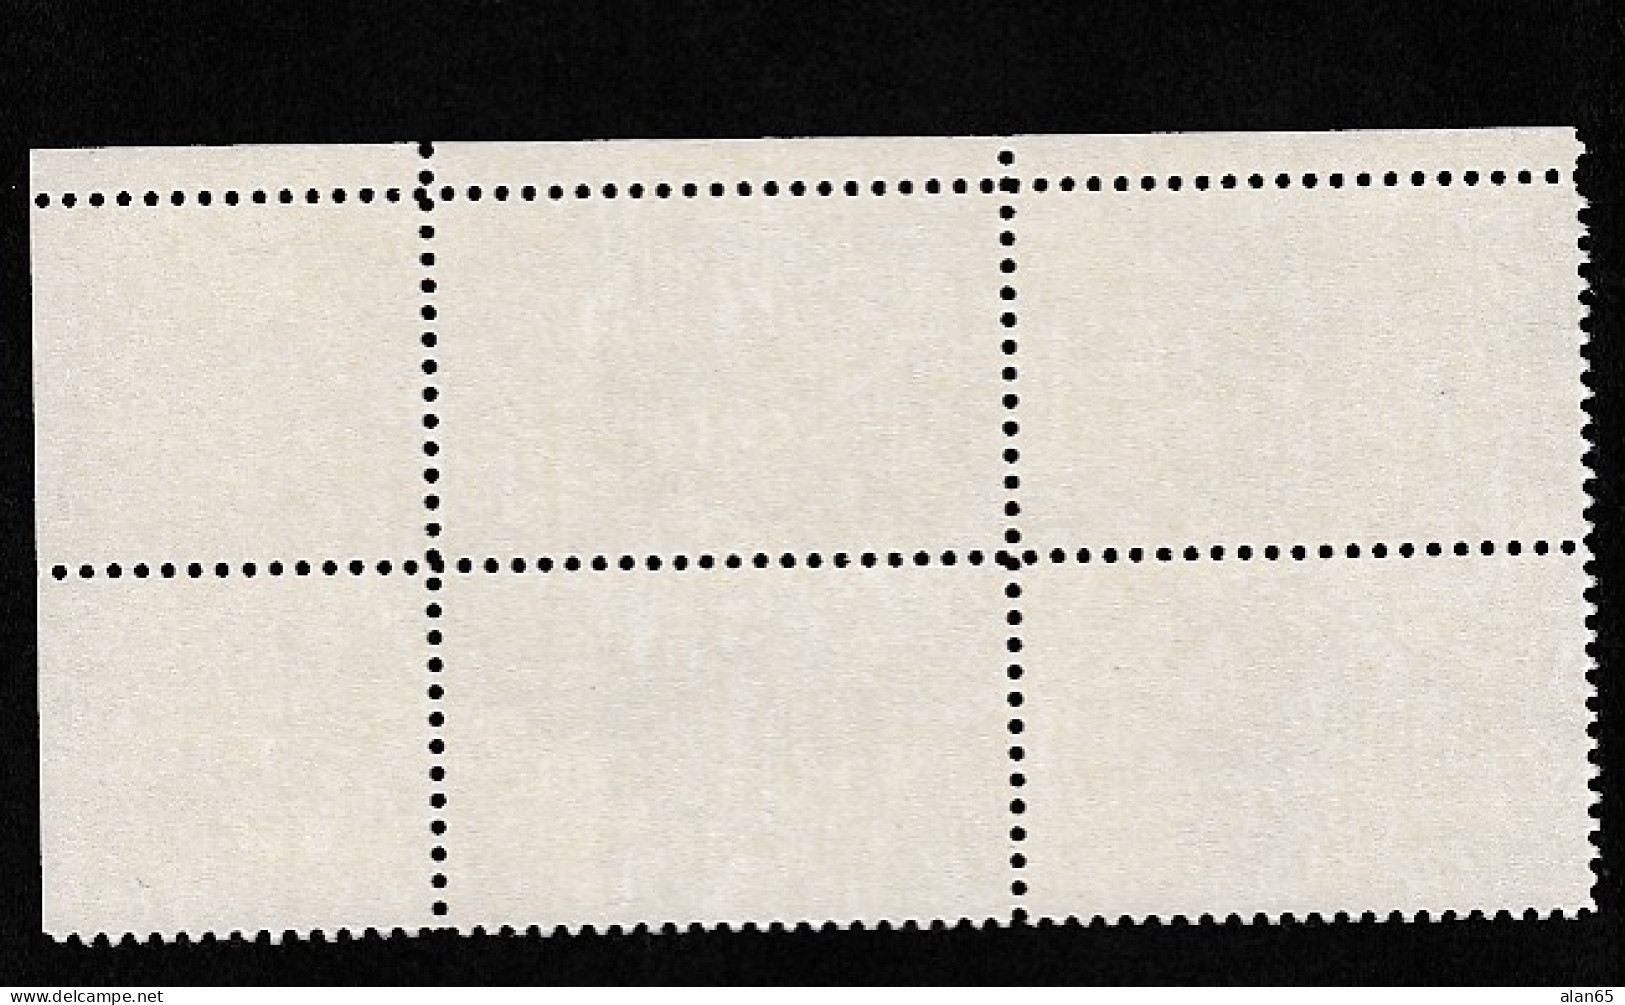 Sc#2167,  Arkansas Statehood 150th Anniversary 22-cent Plate # Block Of 4 MNH 1986 Issue - Plattennummern